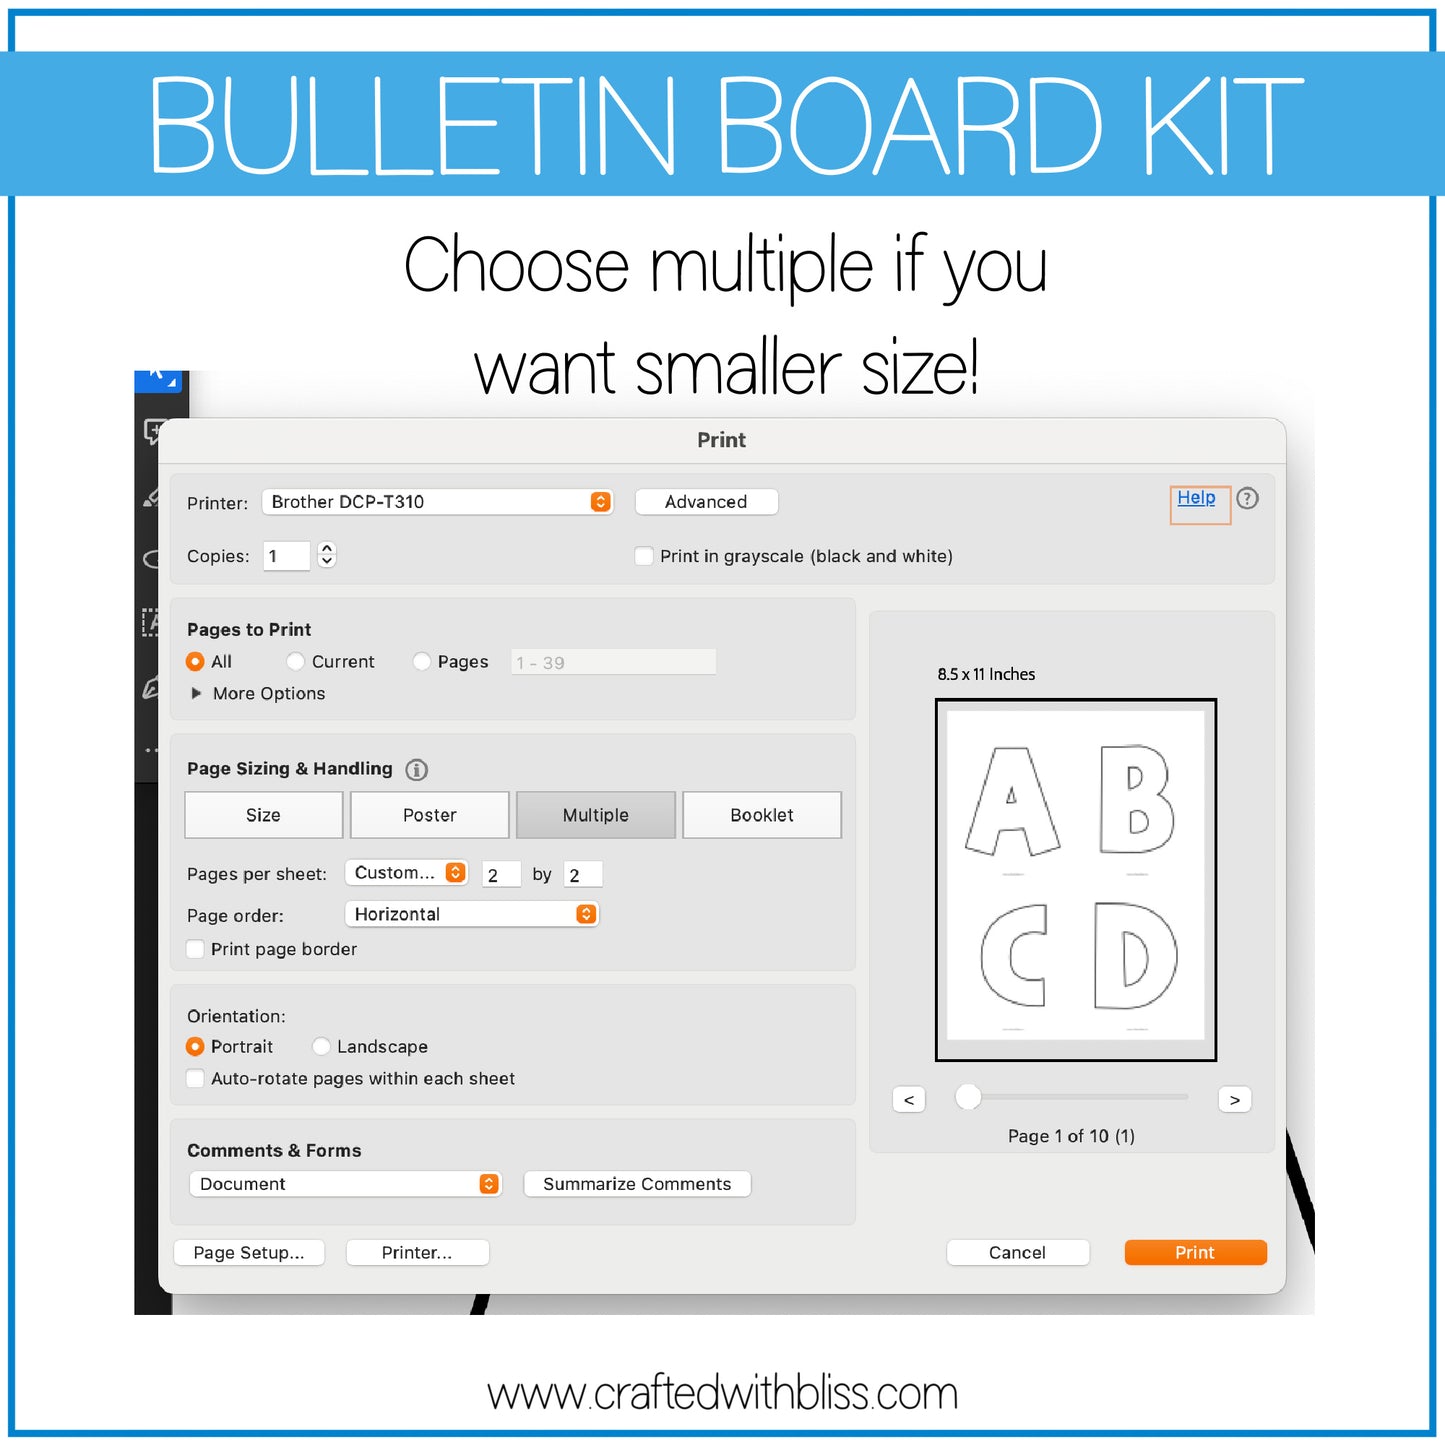 Beelieve In Yourself Bulletin Board Kit Door Classroom Positivity Affirmation